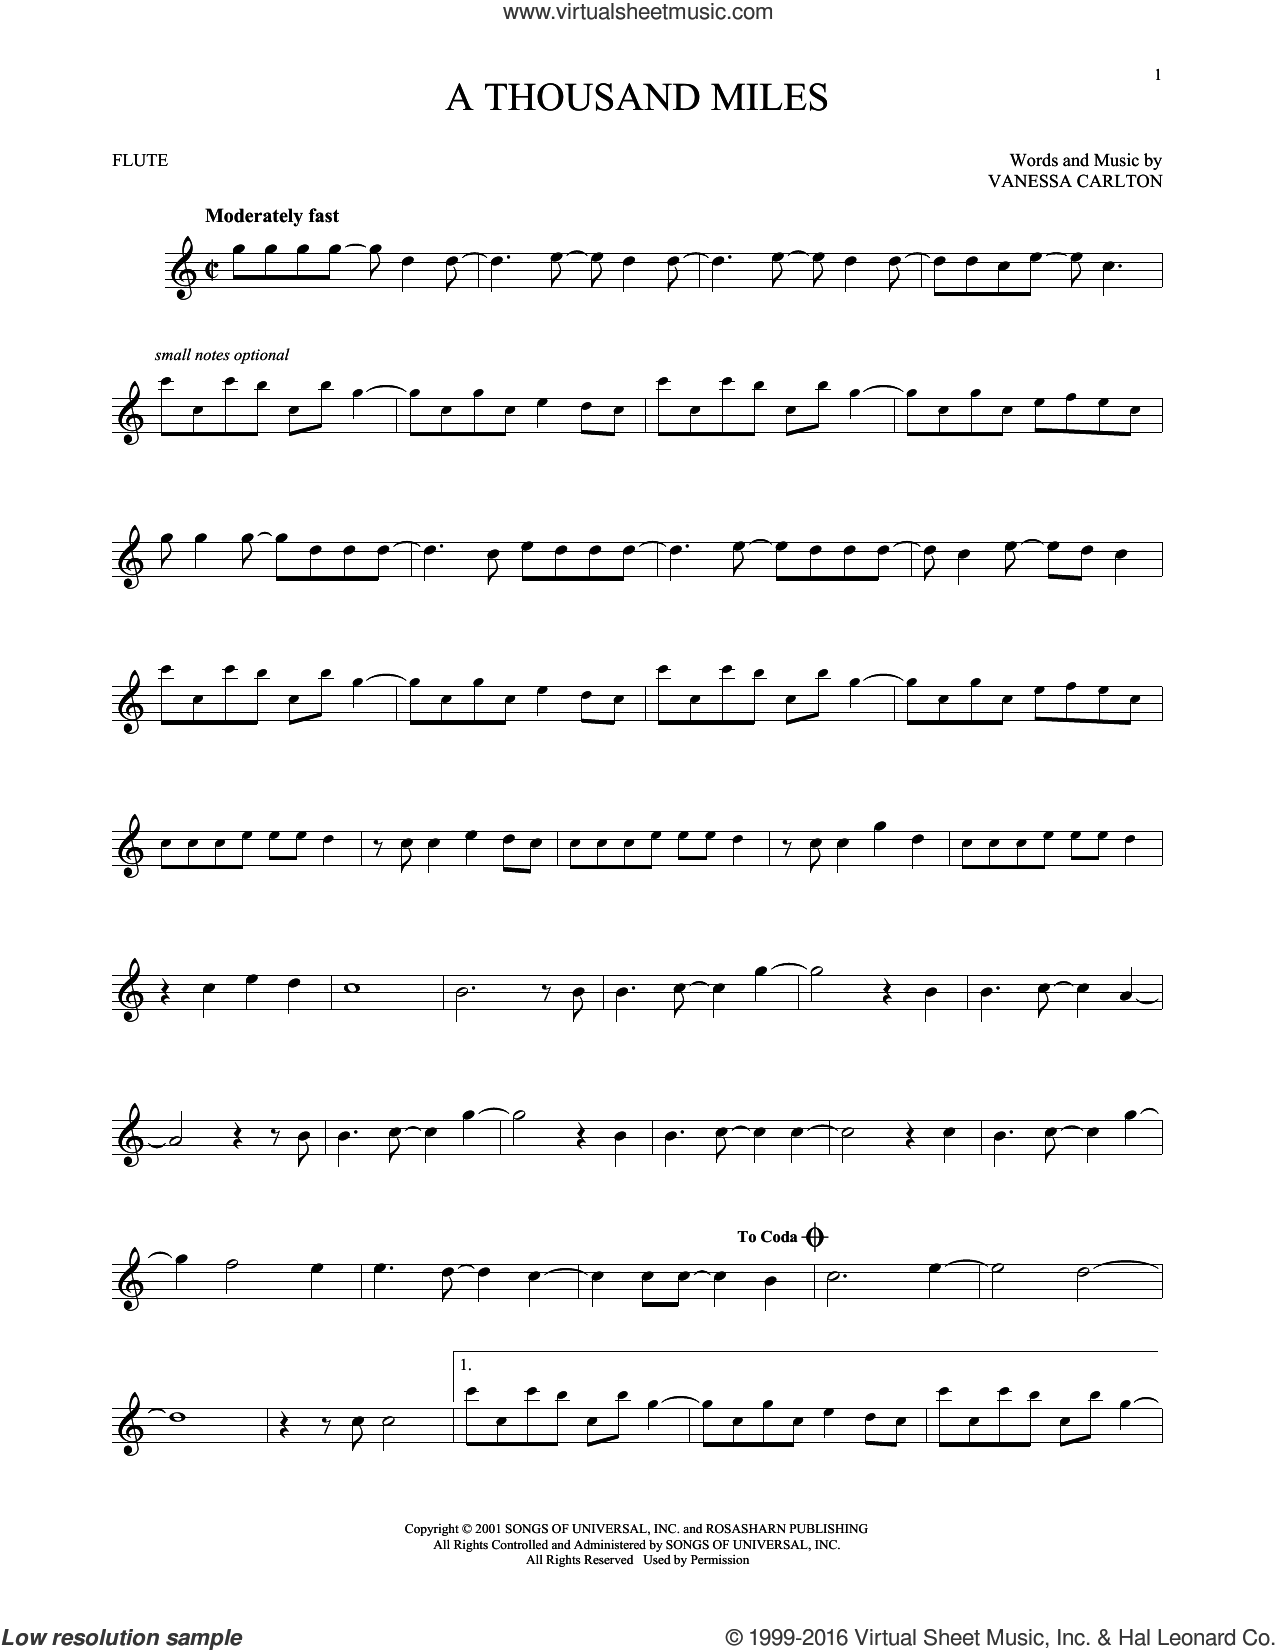 Carlton - A Thousand Miles sheet music for flute solo (PDF)